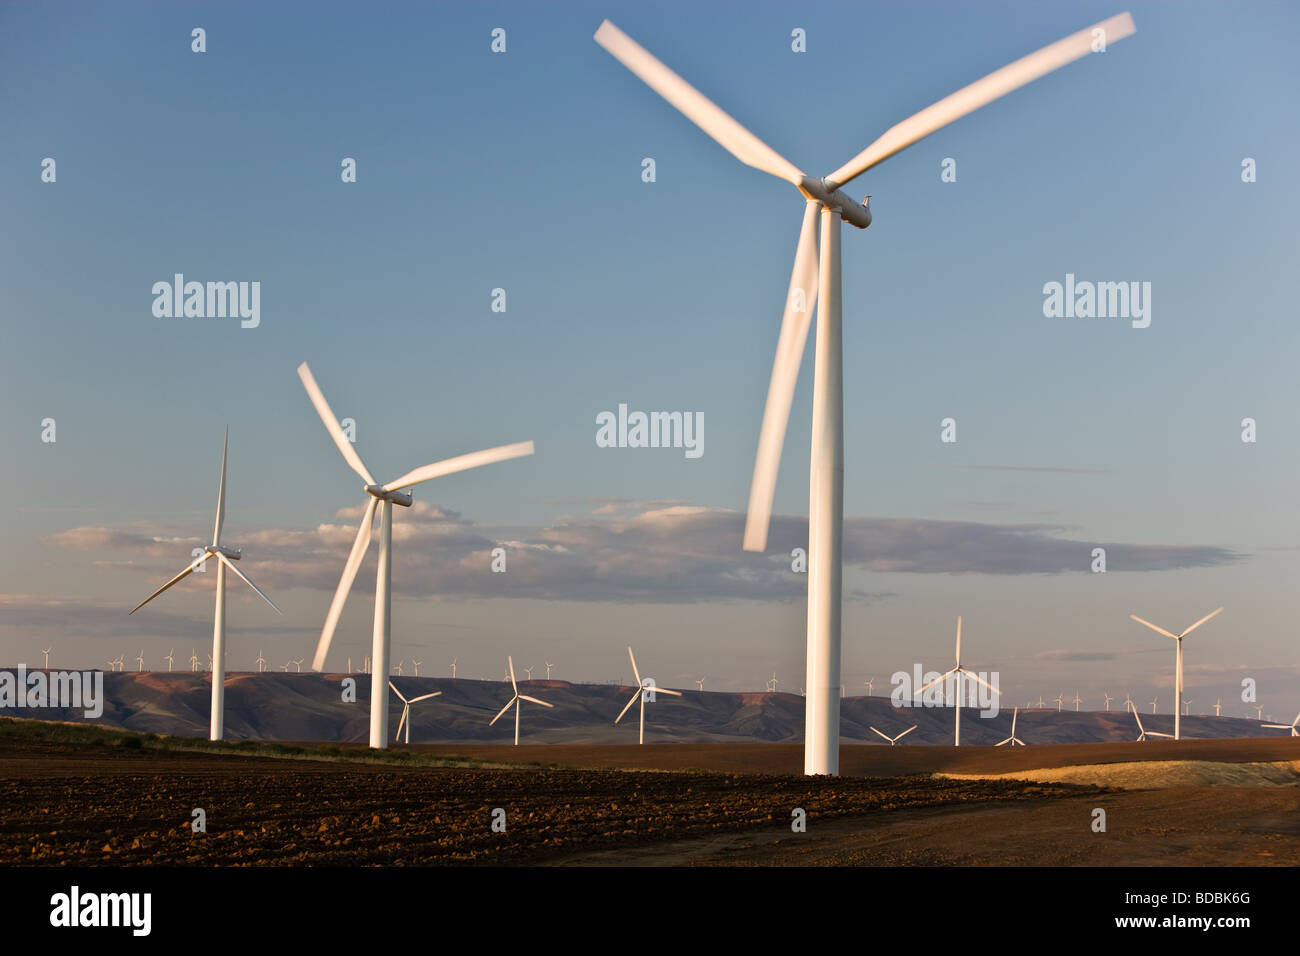 Wind farm, turbines  operating in fallow field. Stock Photo